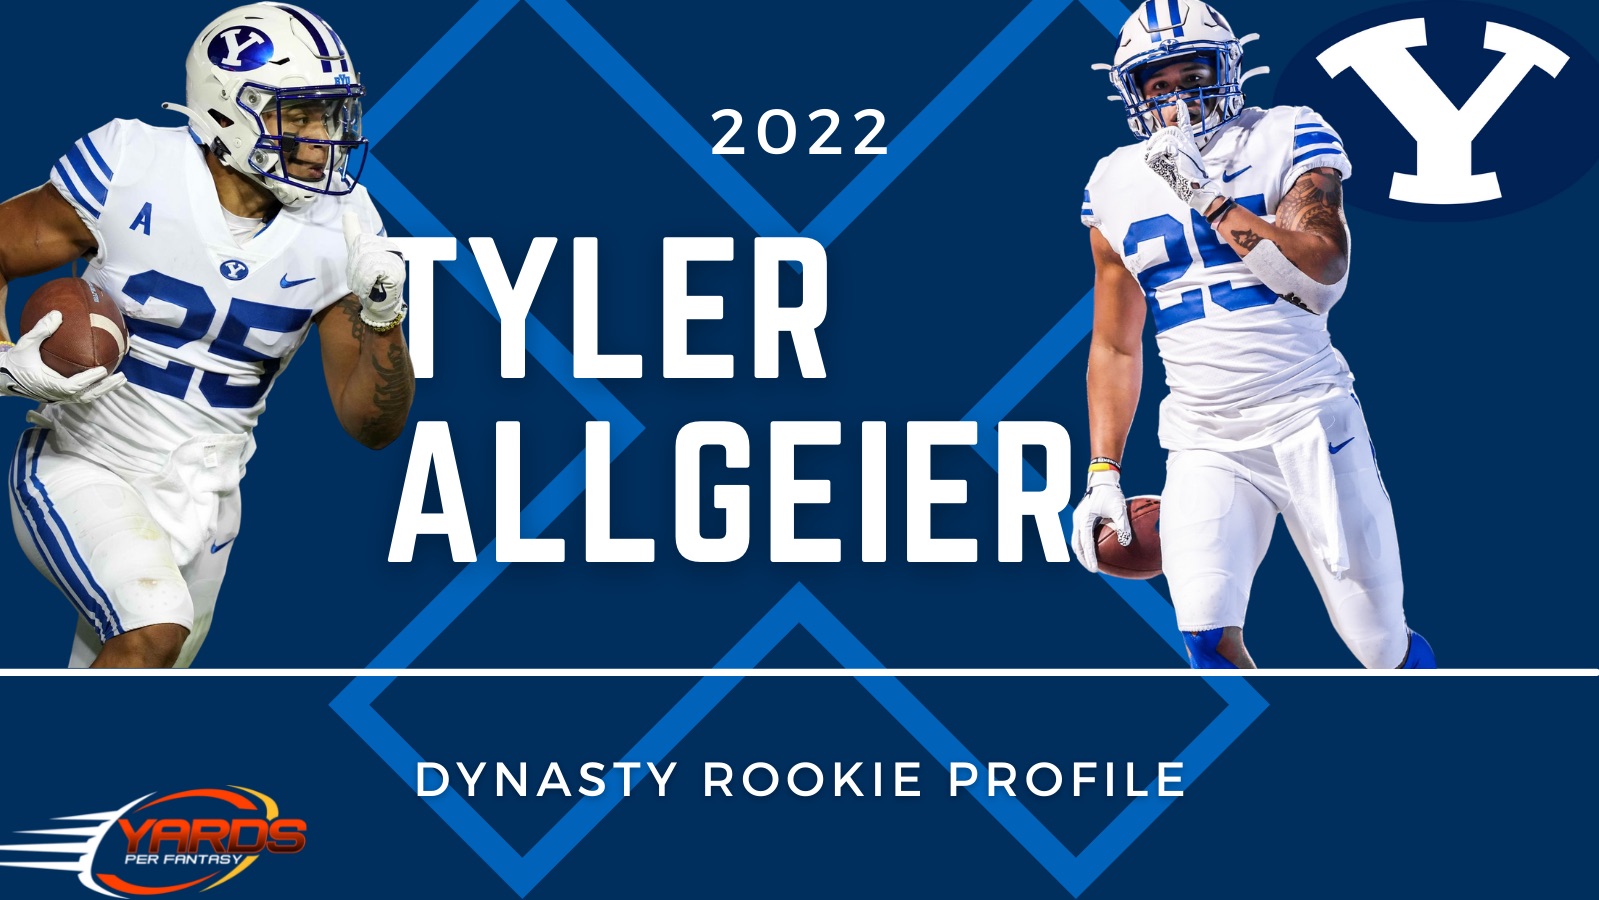 Tyler Allgeier 2022 Dynasty Rookie Profile Yards Per Fantasy